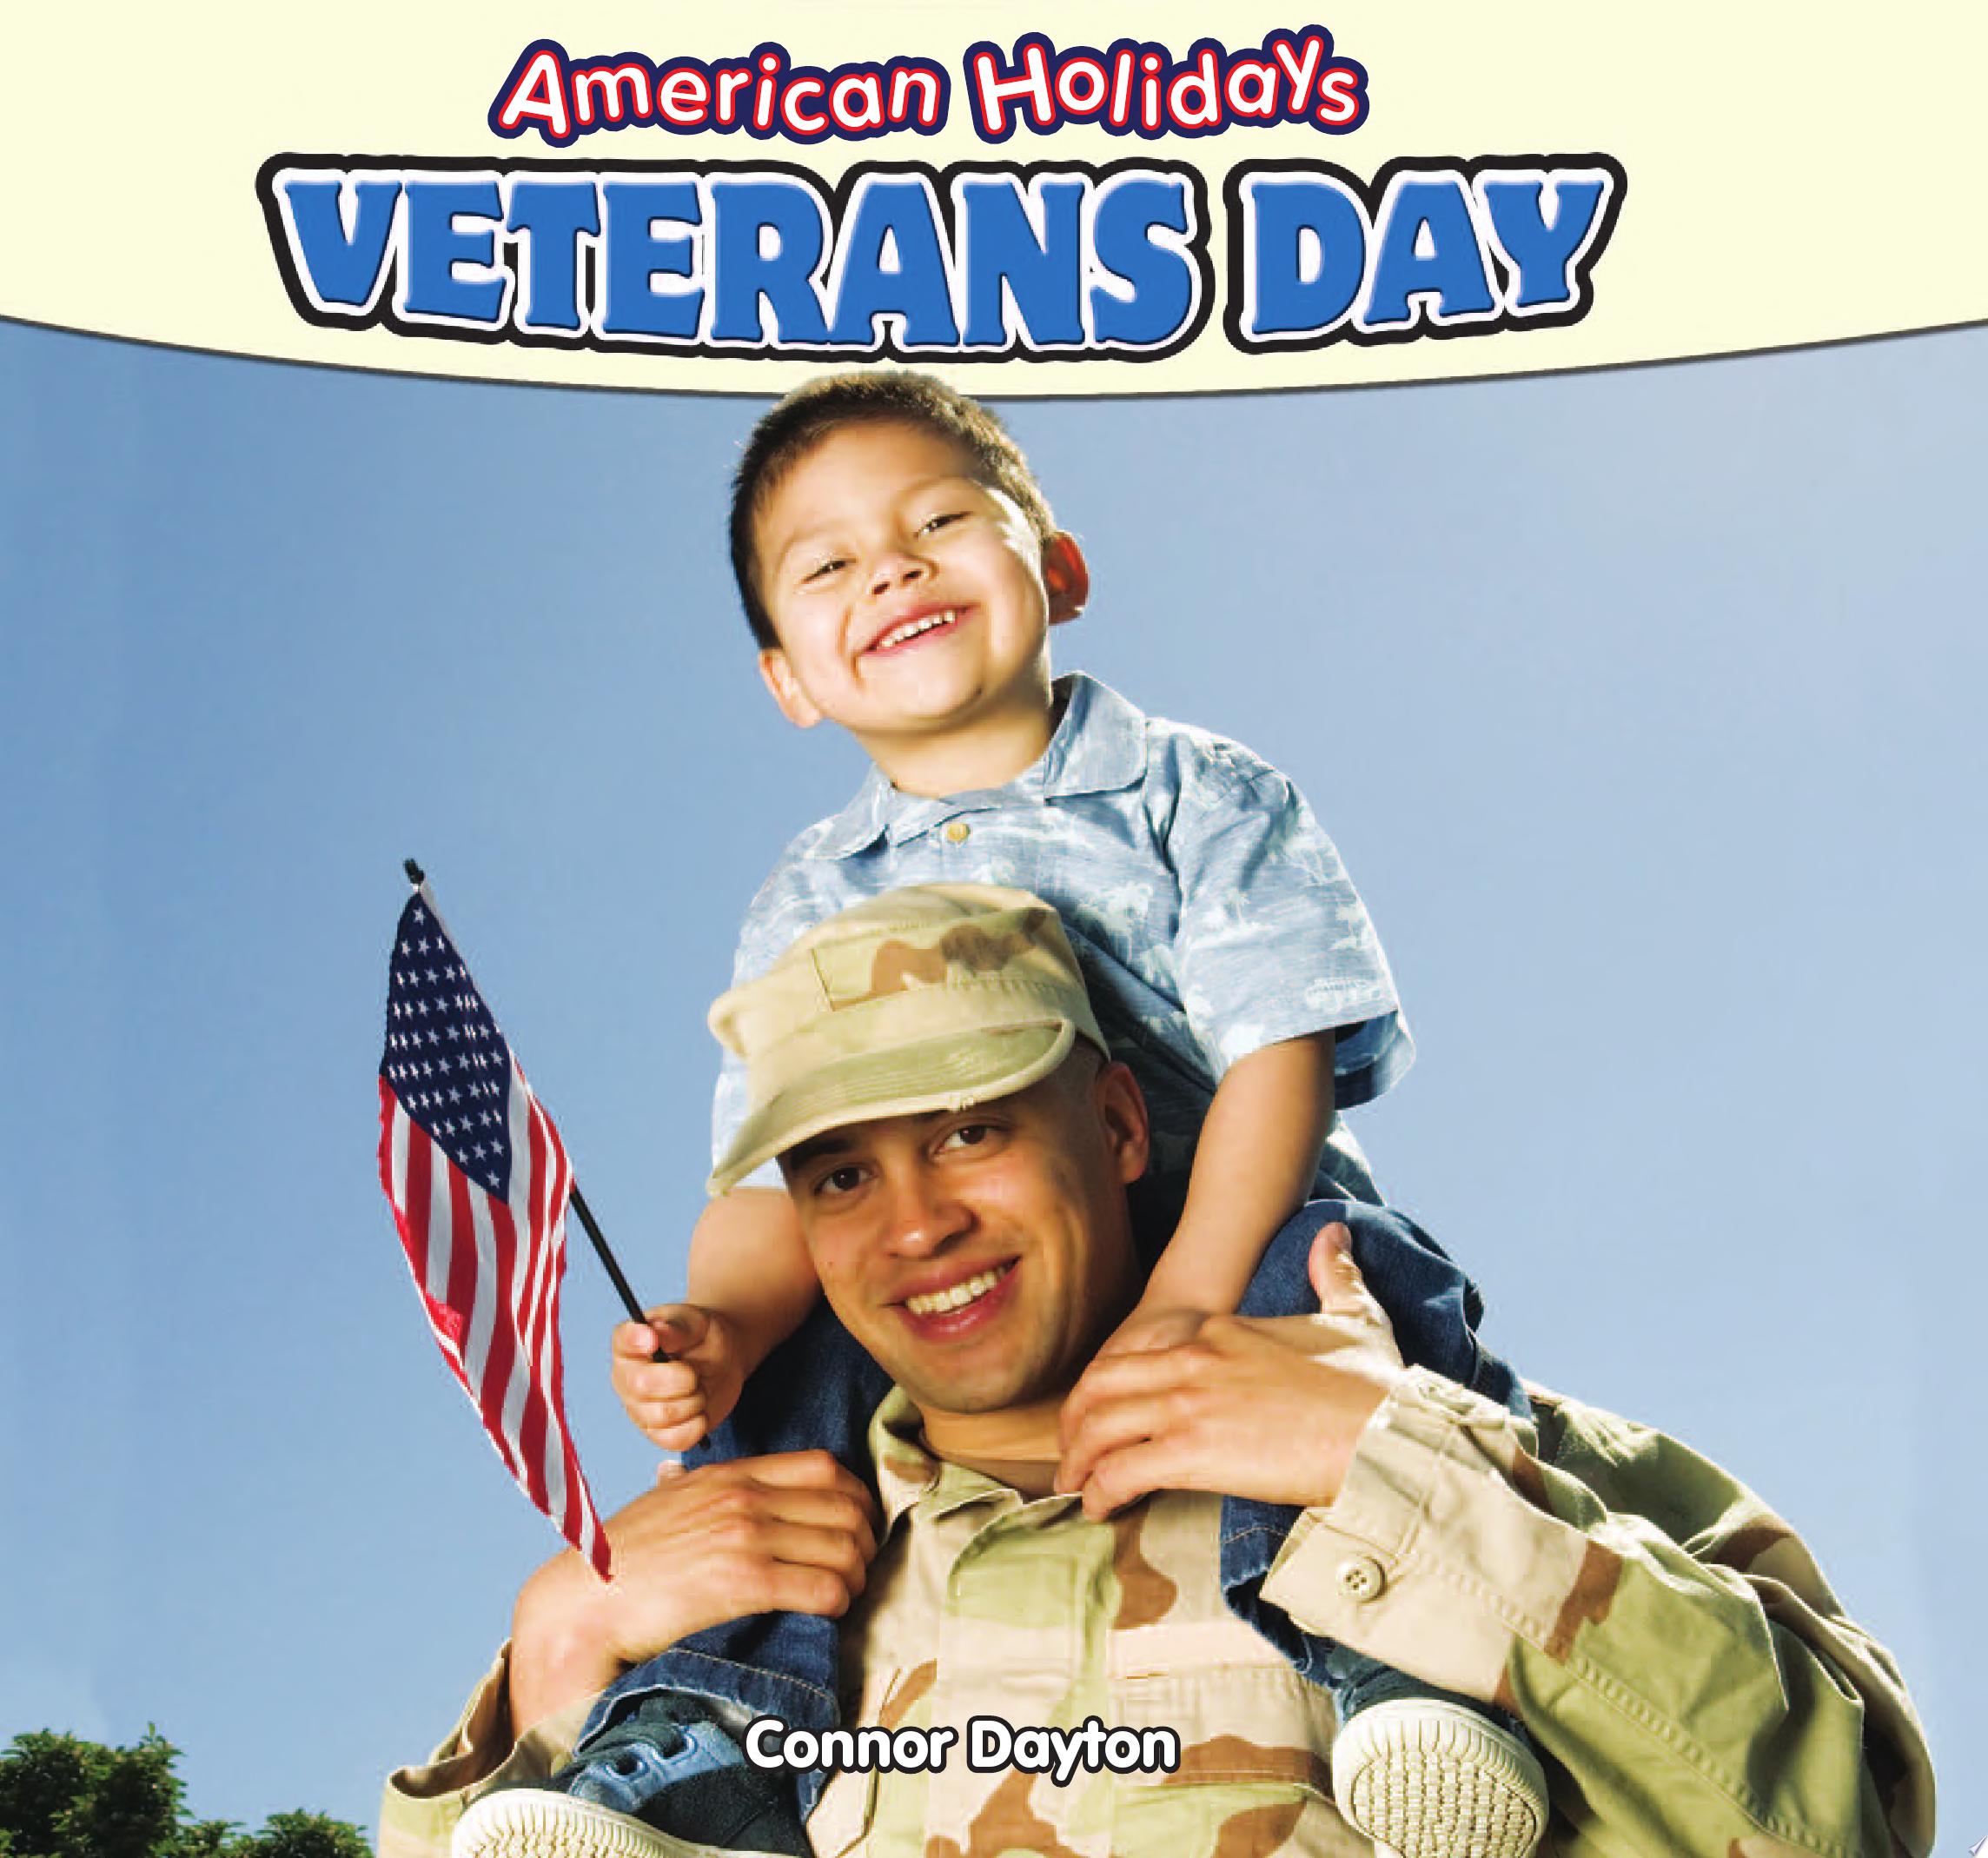 Image for "Veterans Day"